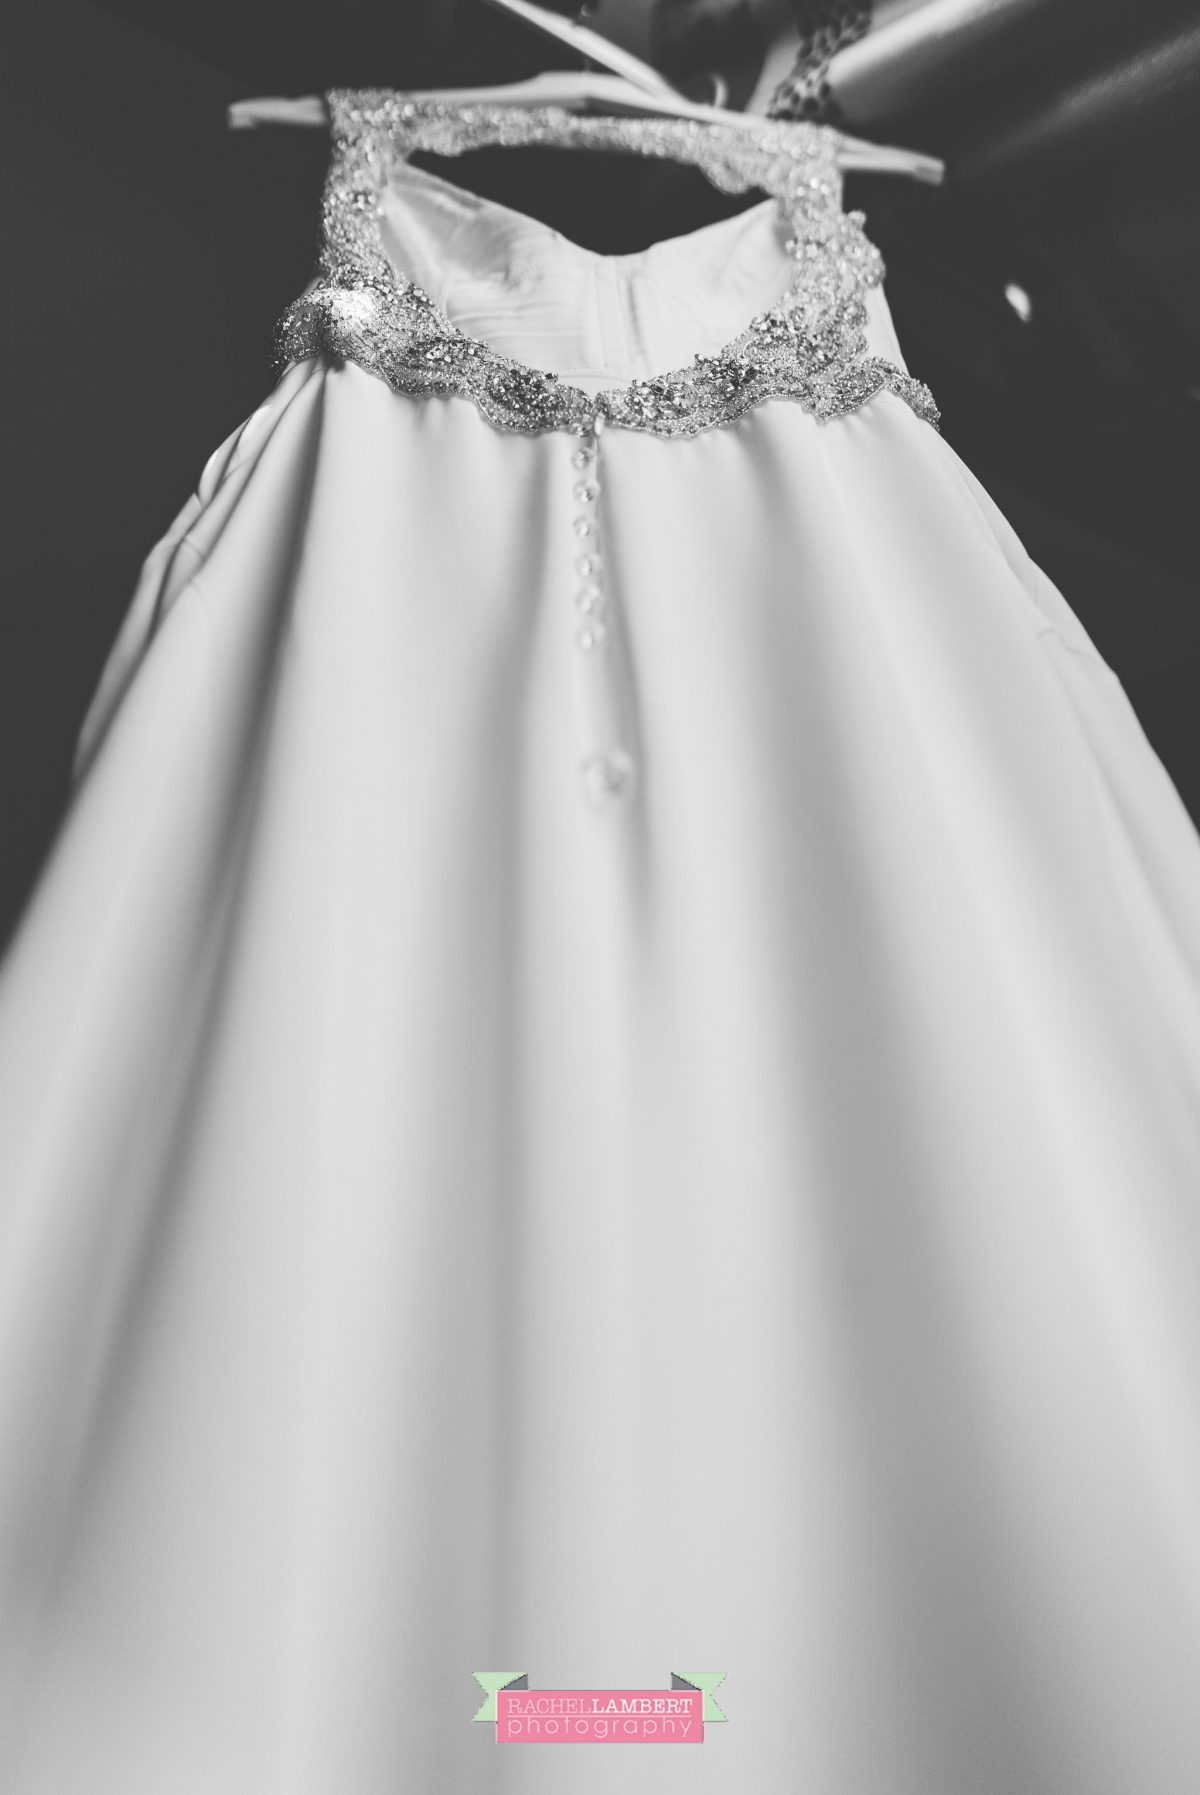 Rachel Lambert Photography llanerch vineyard wedding photographer bridal dress laura may bridal